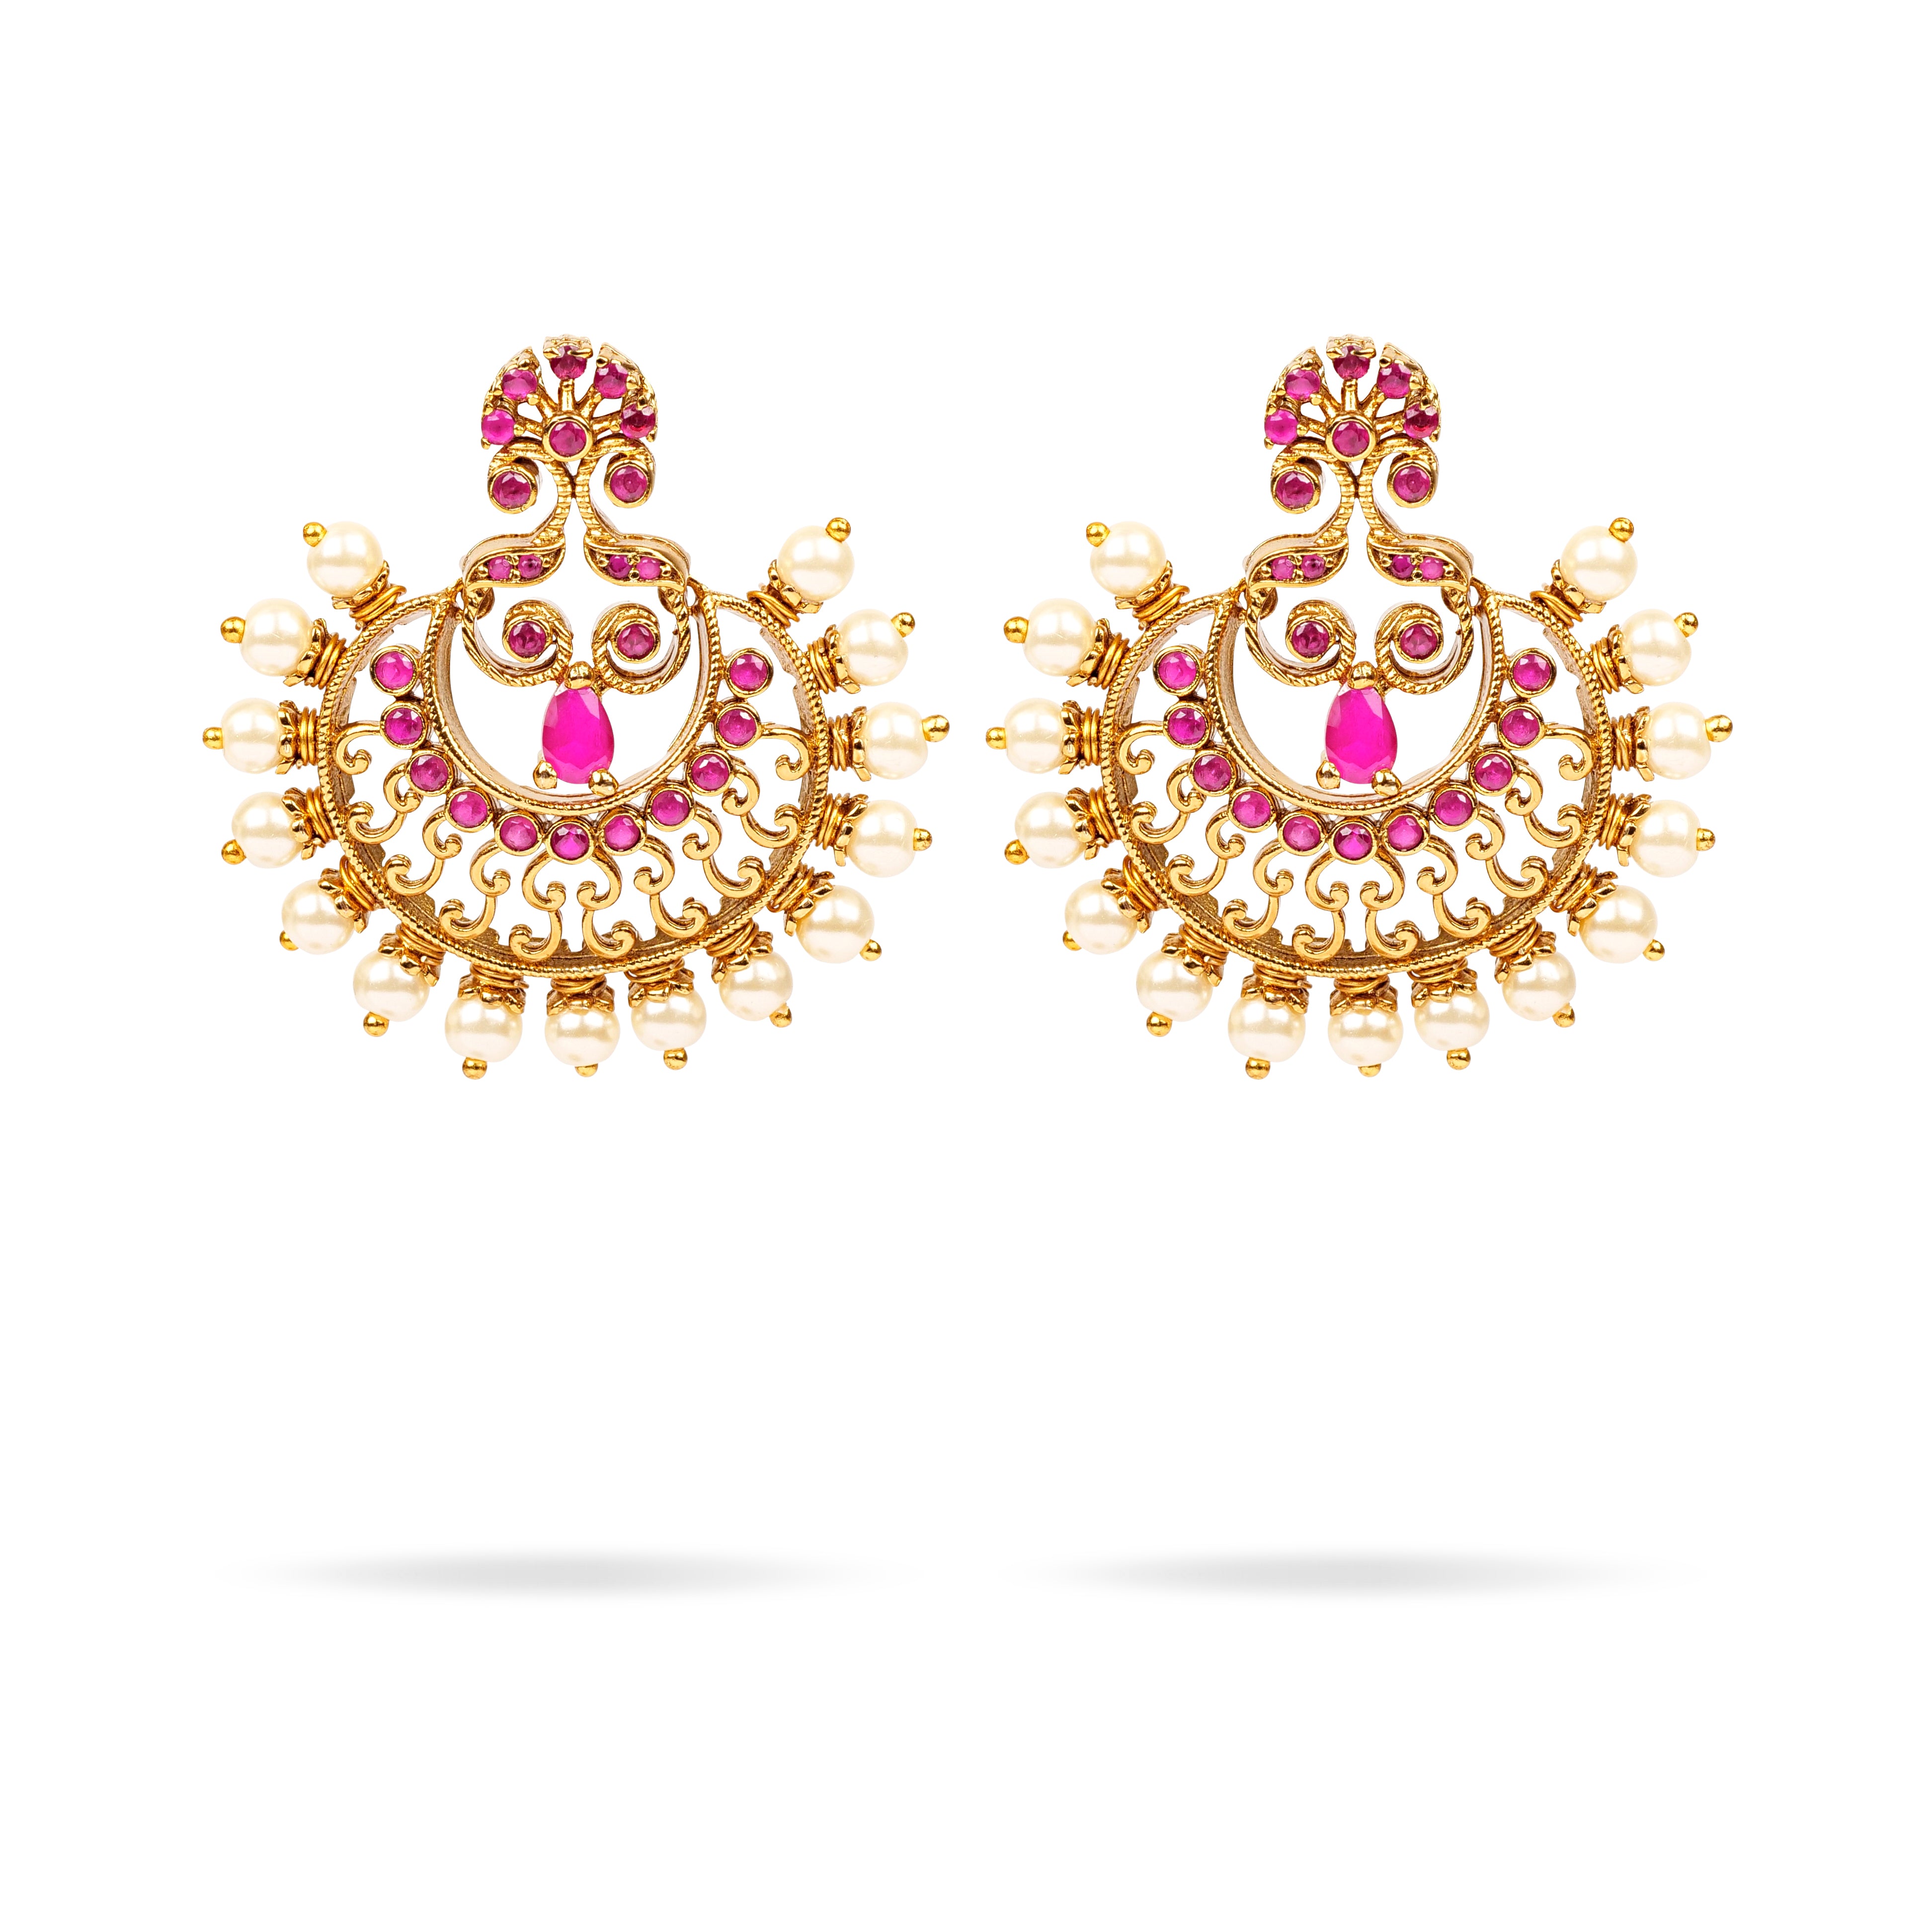 Kanjari Classic Chaand Earrings in Ruby